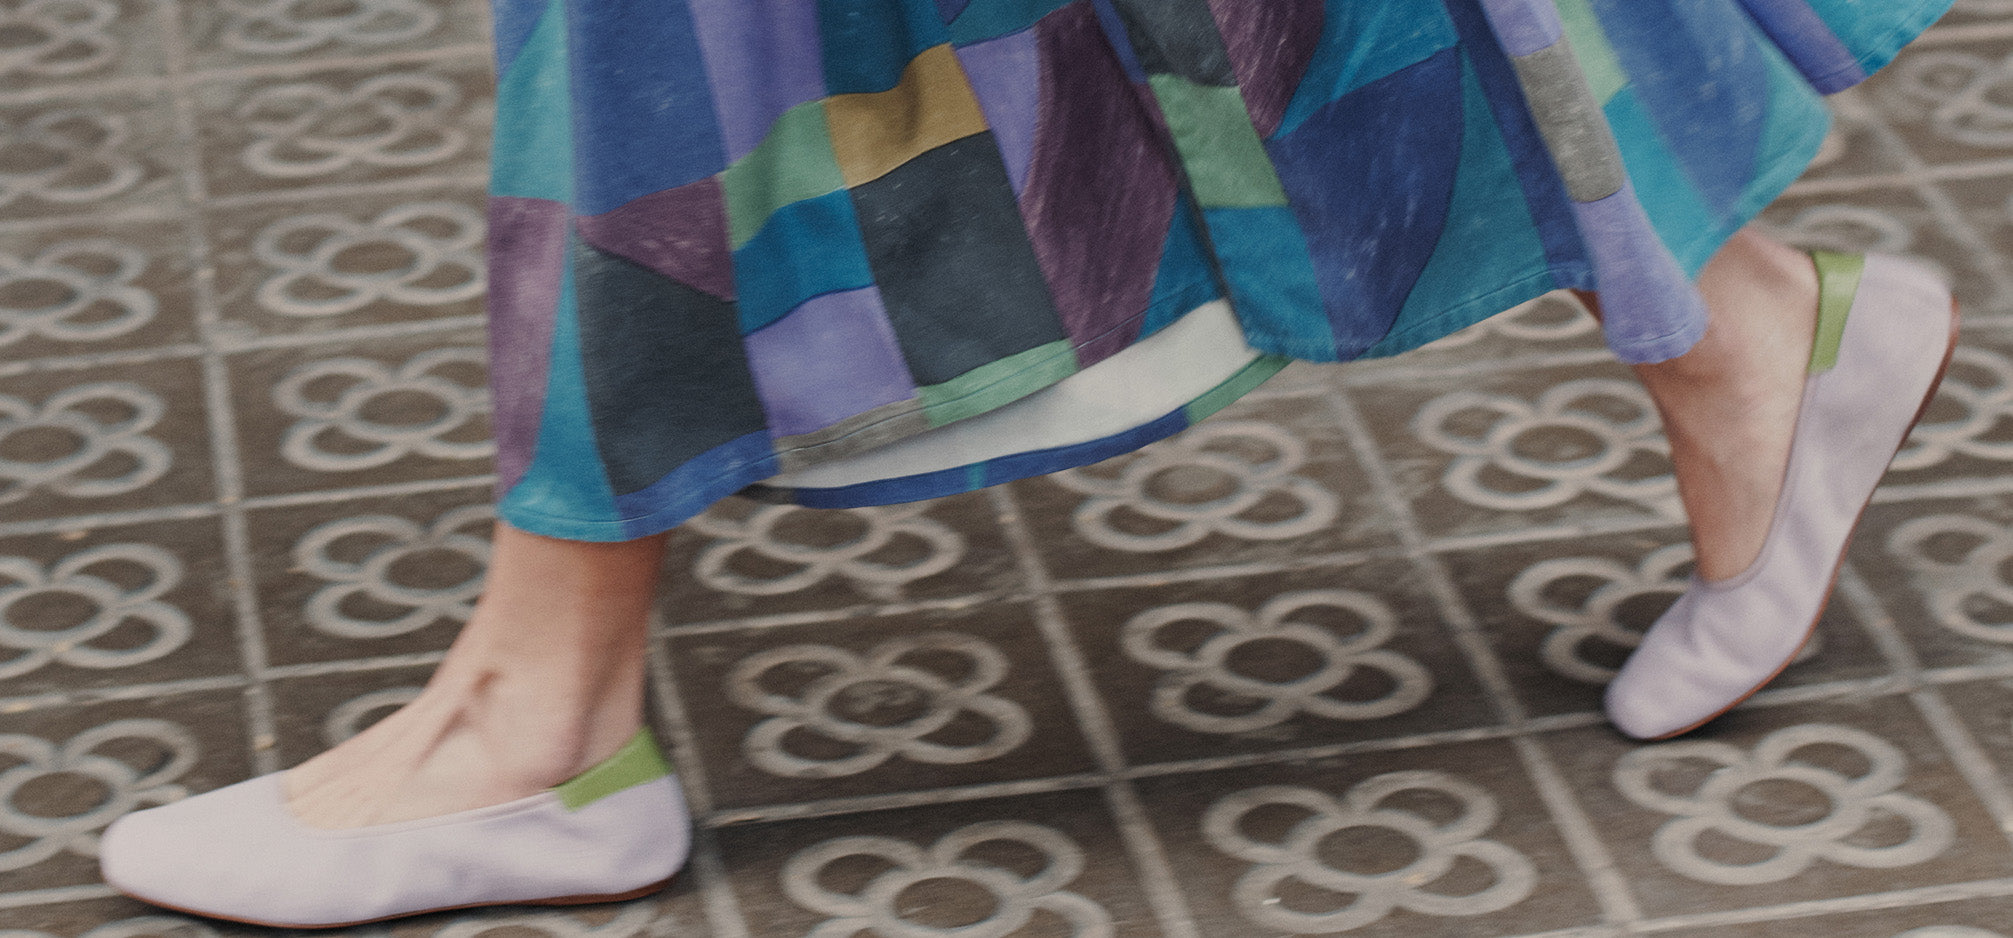 Woman wearing ballet flats walking on tiles